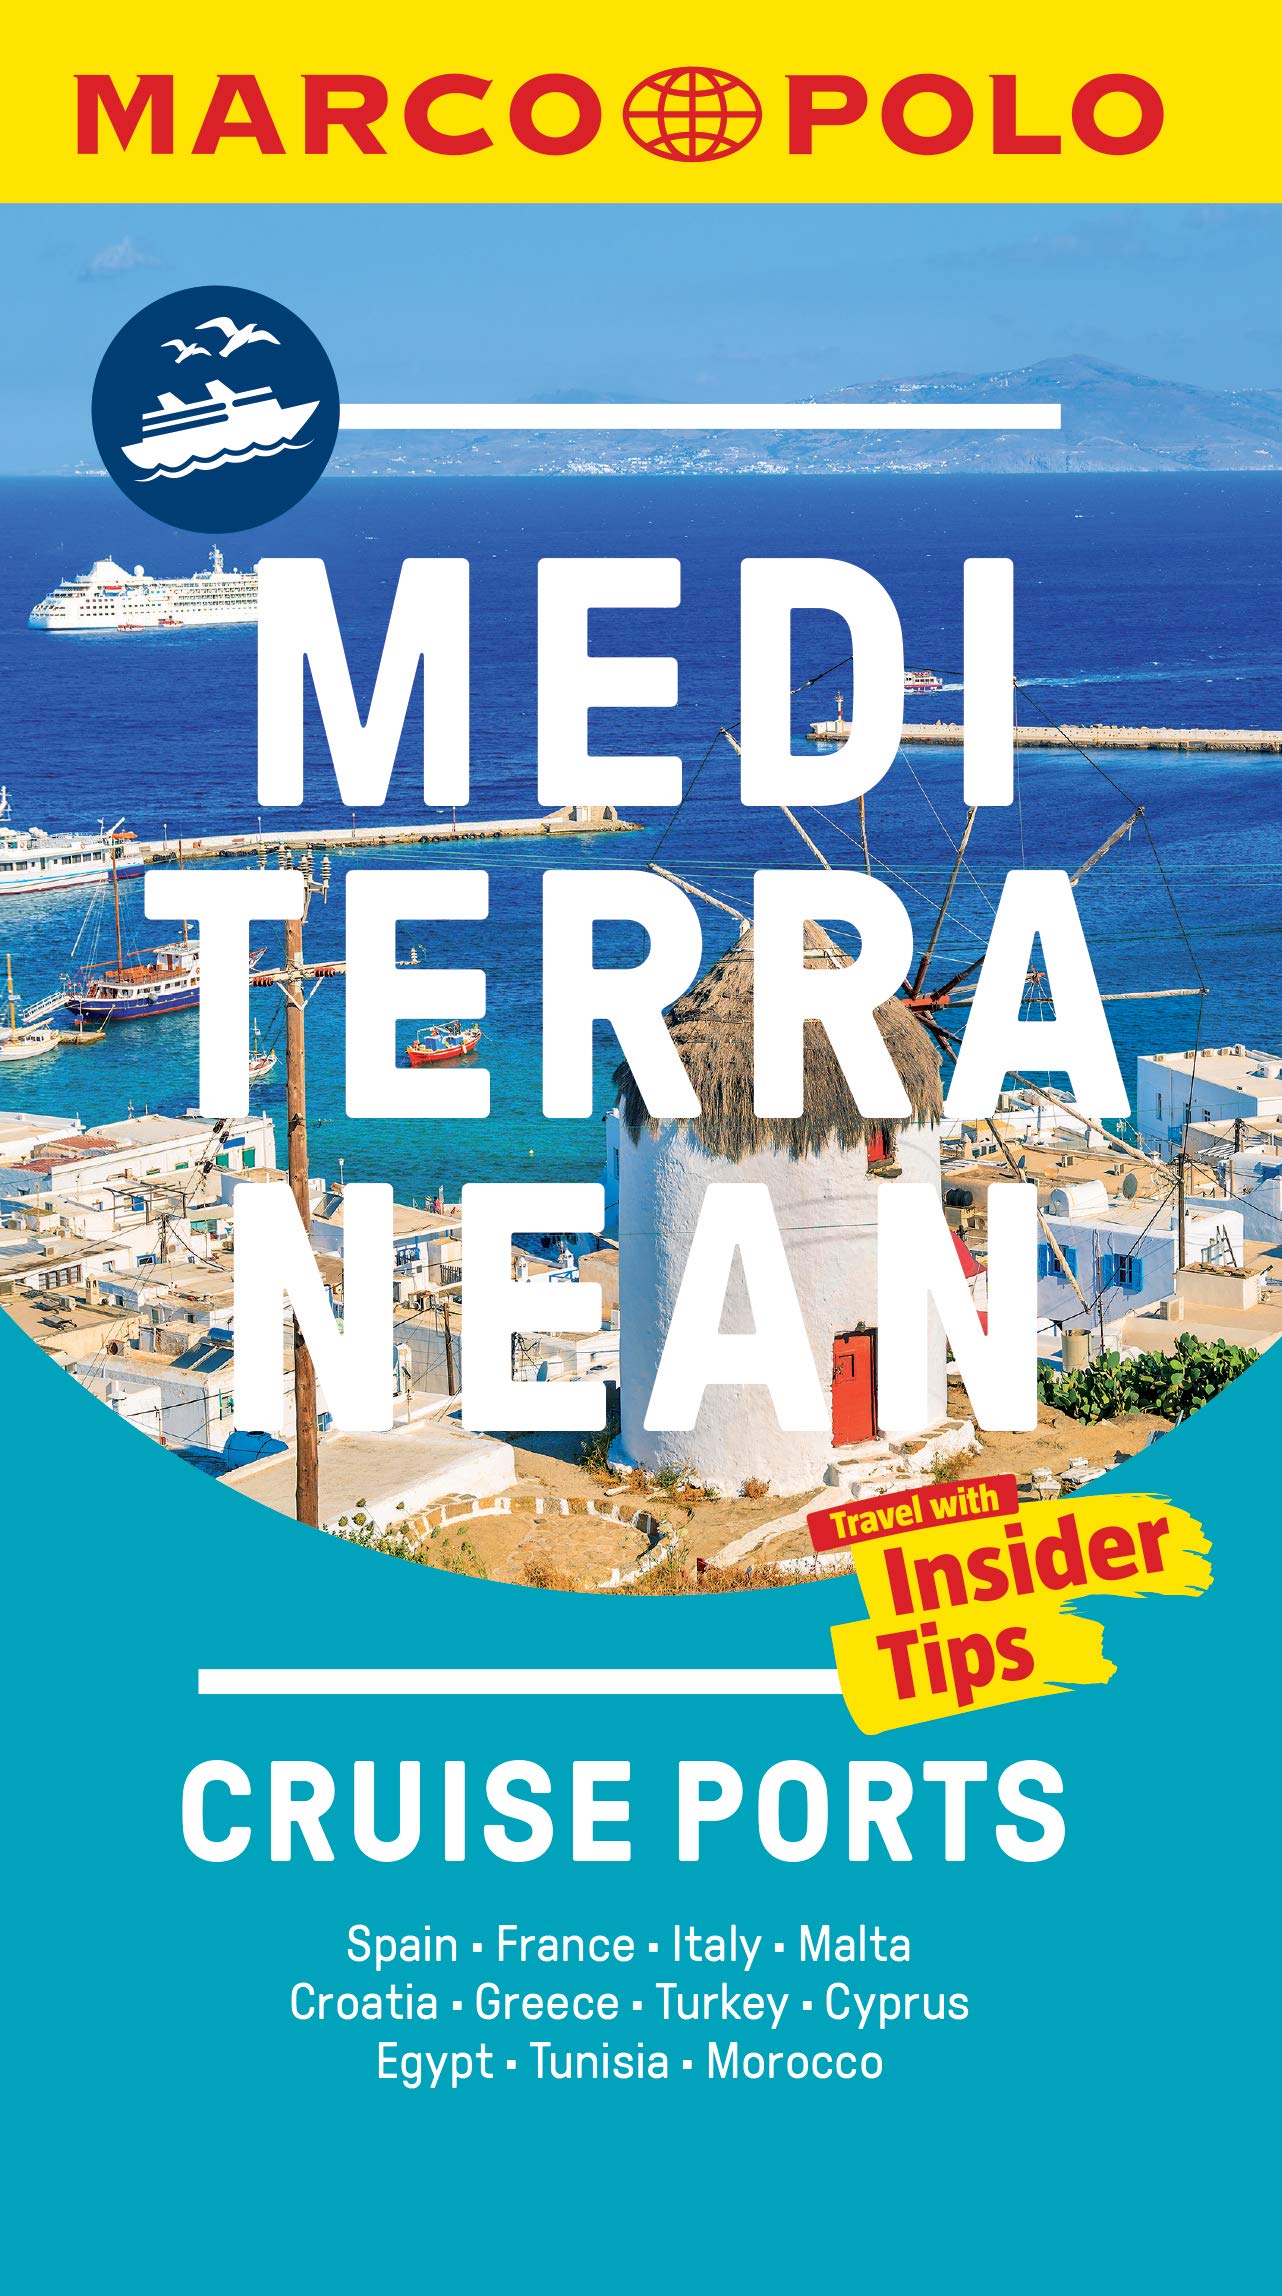 Mediterranean Cruise Ports